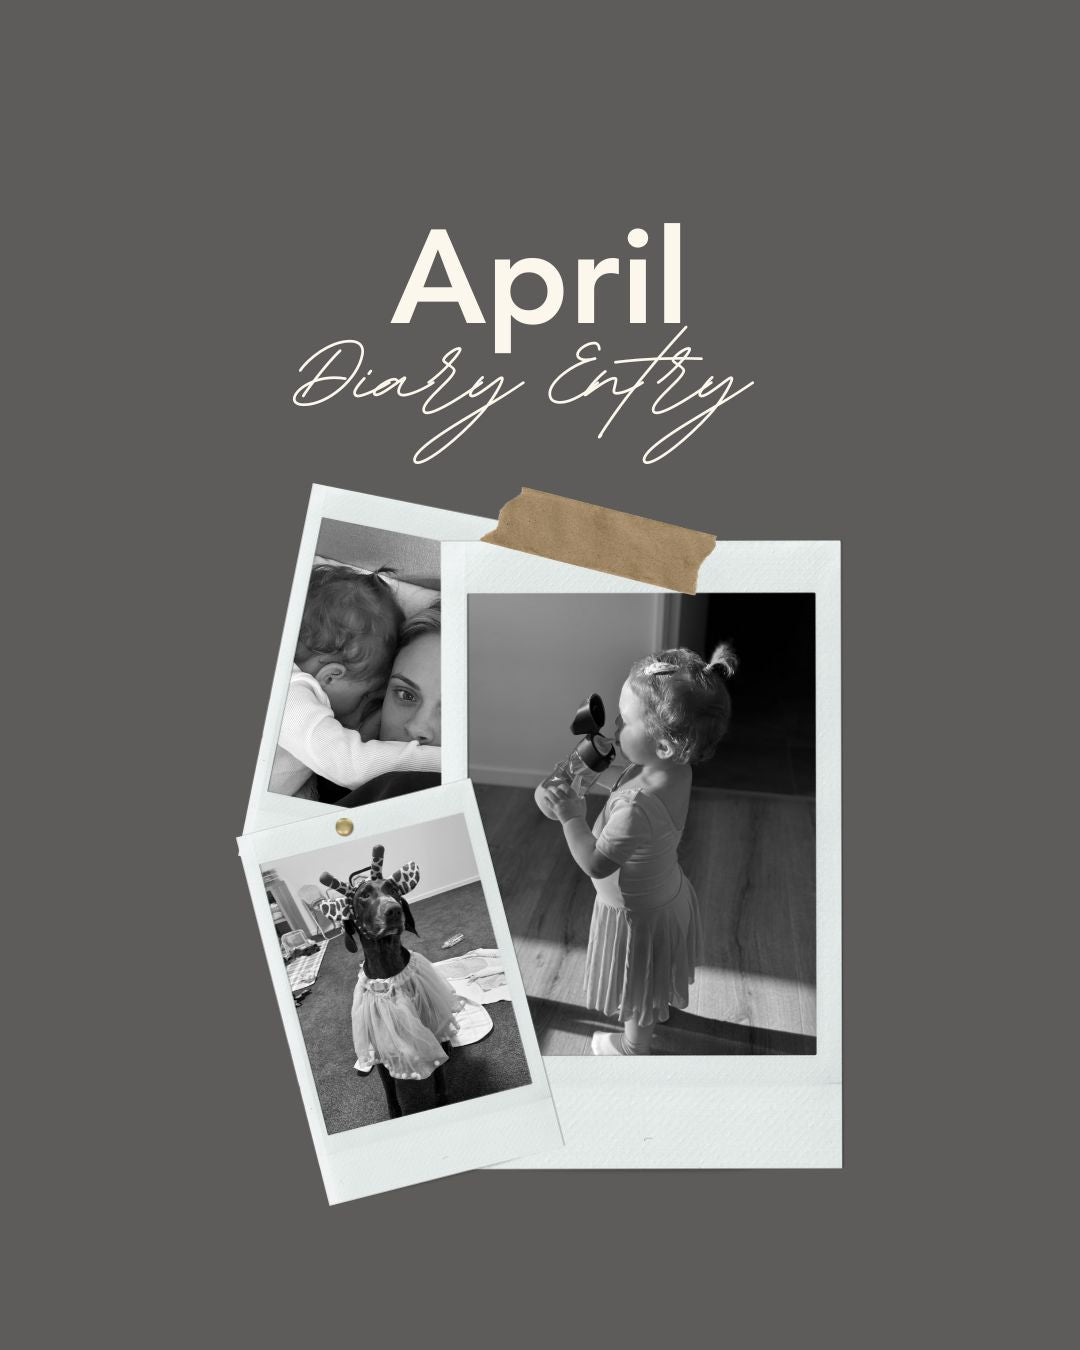 Grace's April Diary Entry